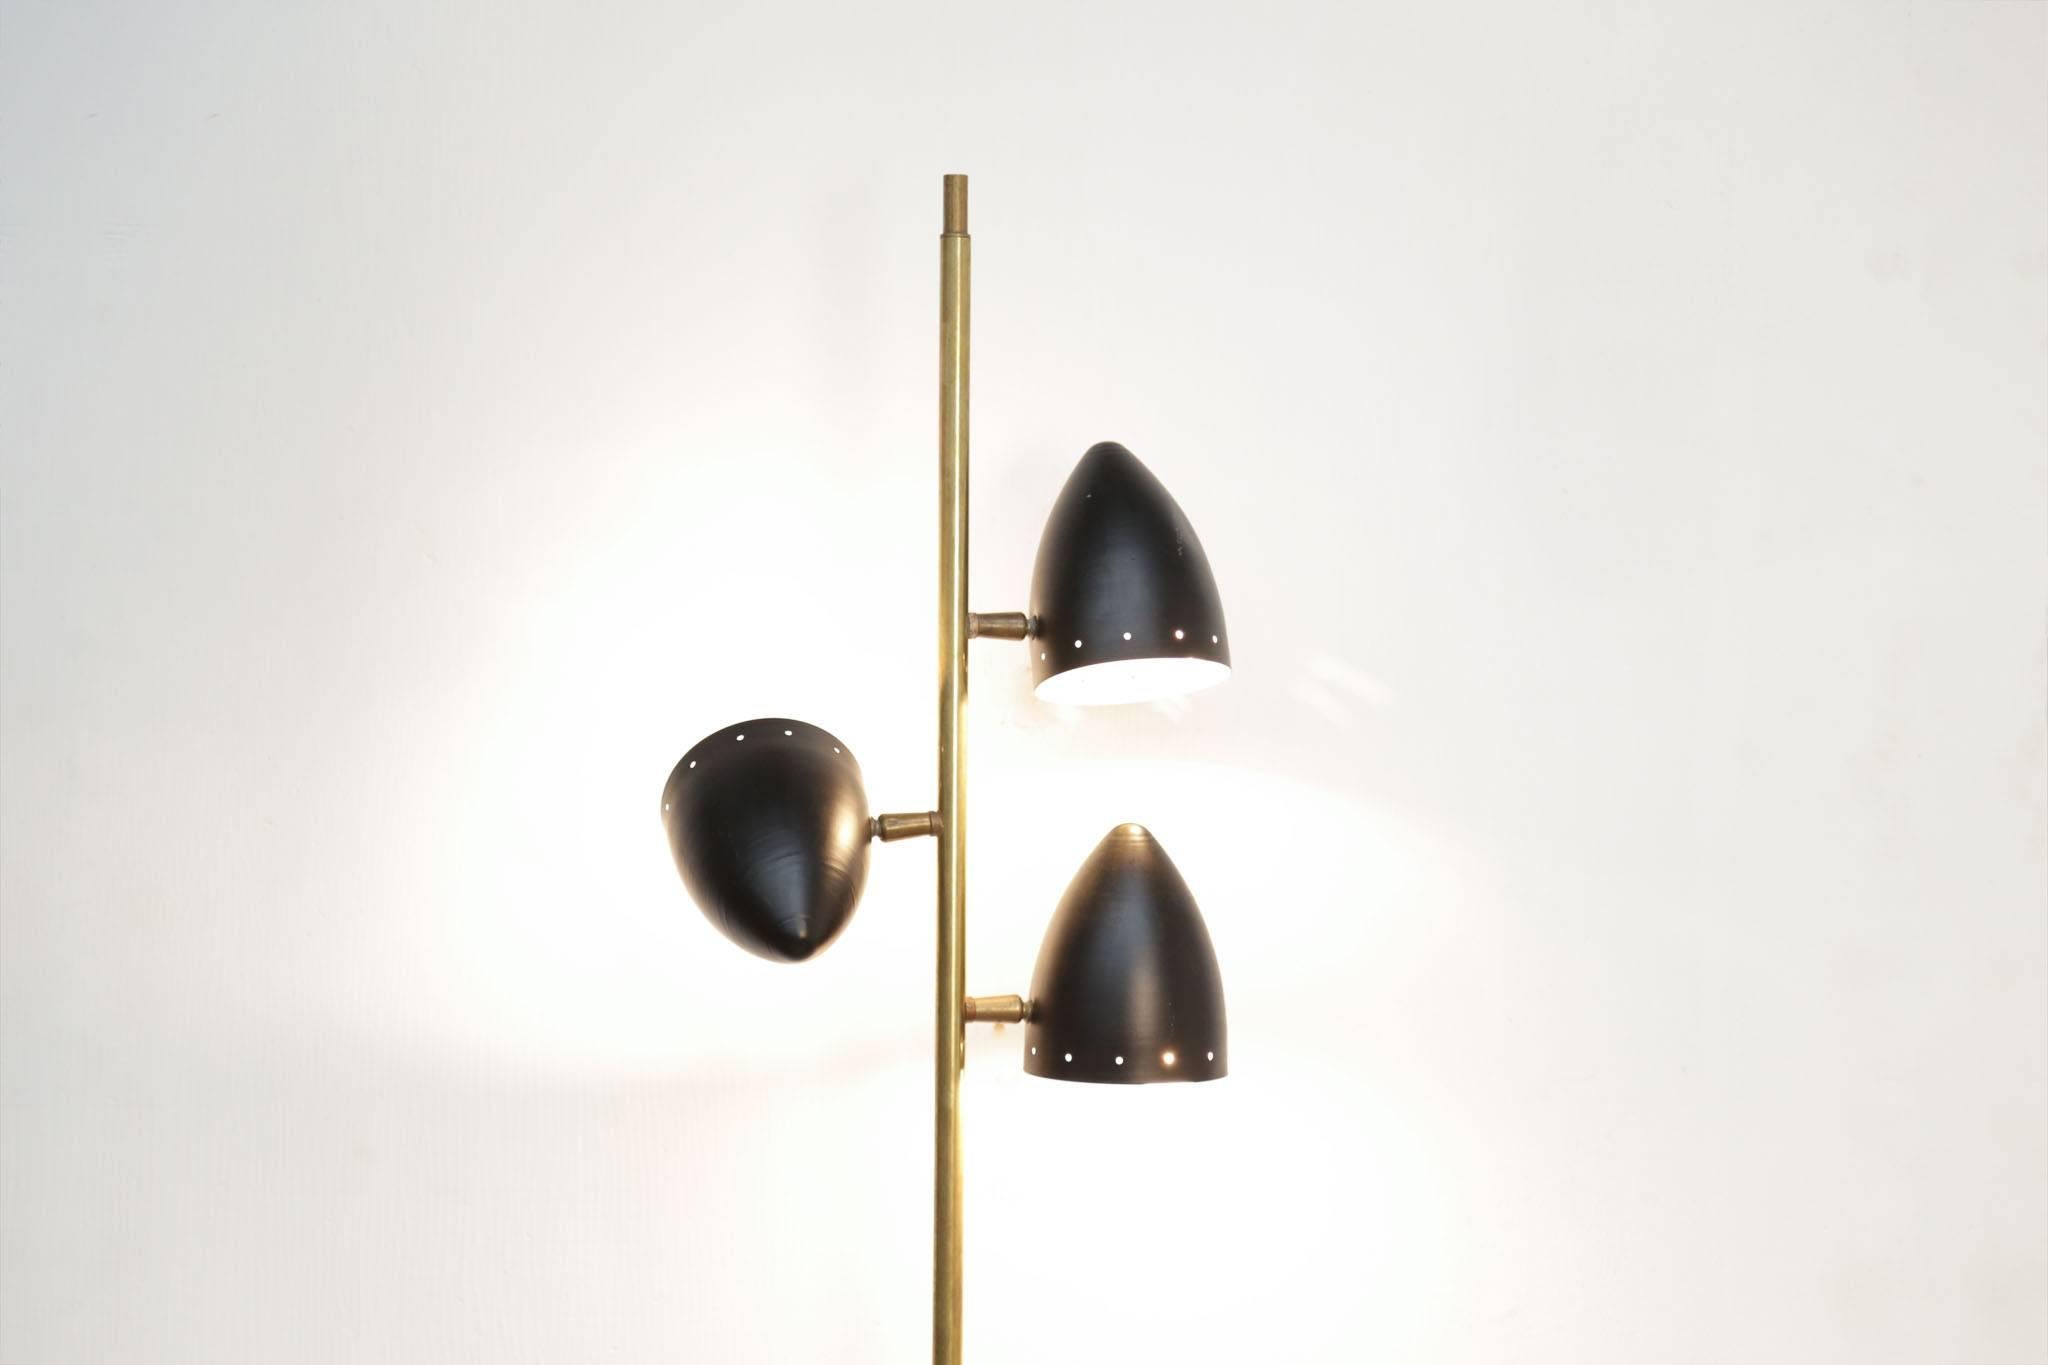 Brass Italian Wall Light in Stilnovo Style Vintage Design